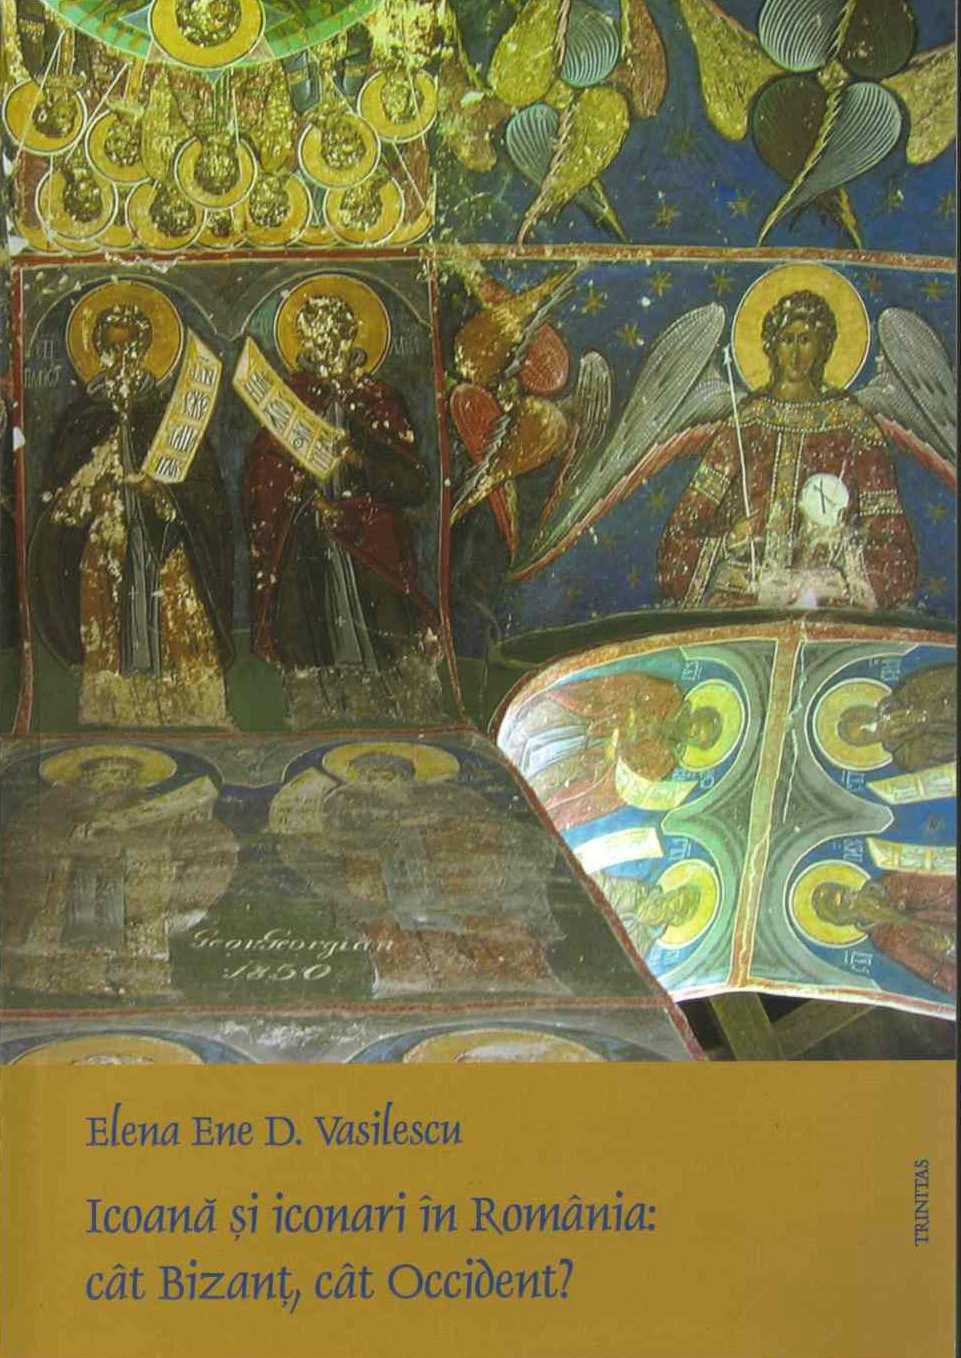 Icoana si iconari in Romania: cat Bizant, cat Occident?